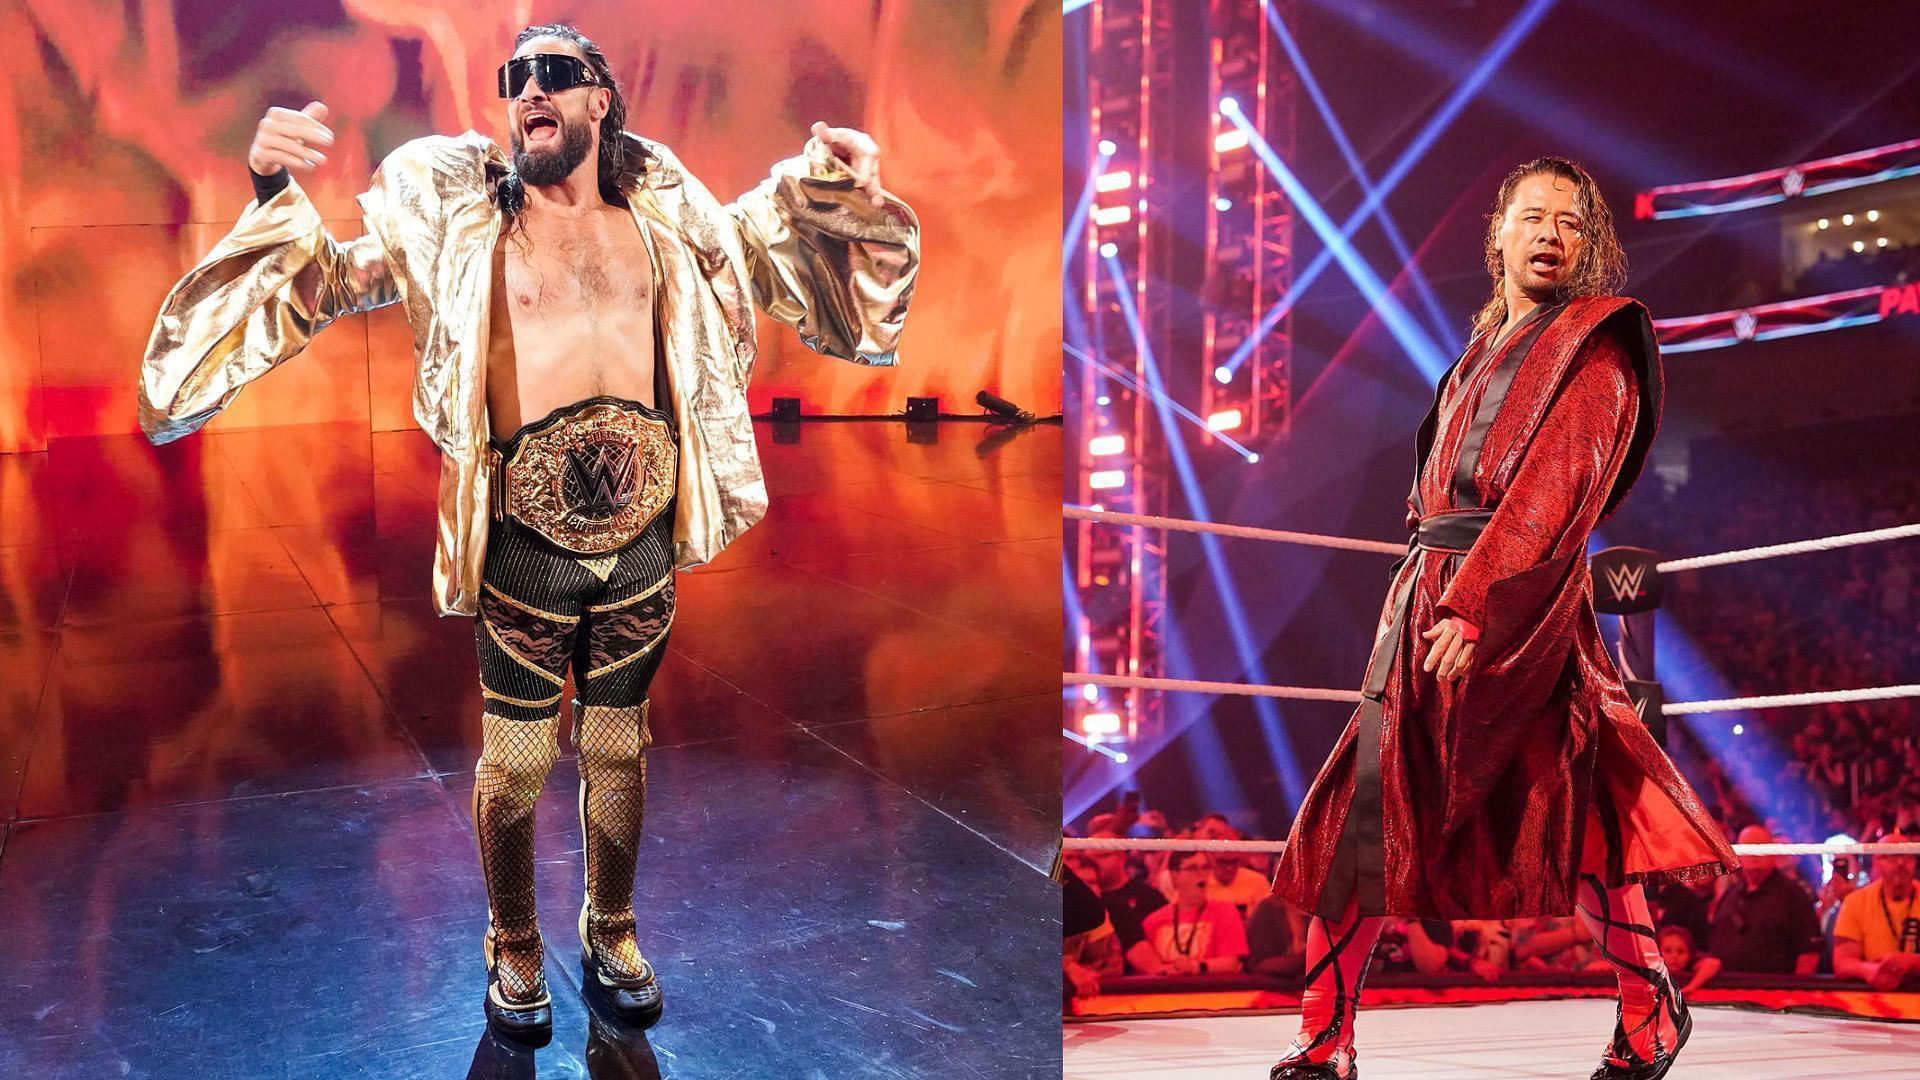 Shinsuke Nakamura Attacks Seth Rollins After WWE Payback Goes Off